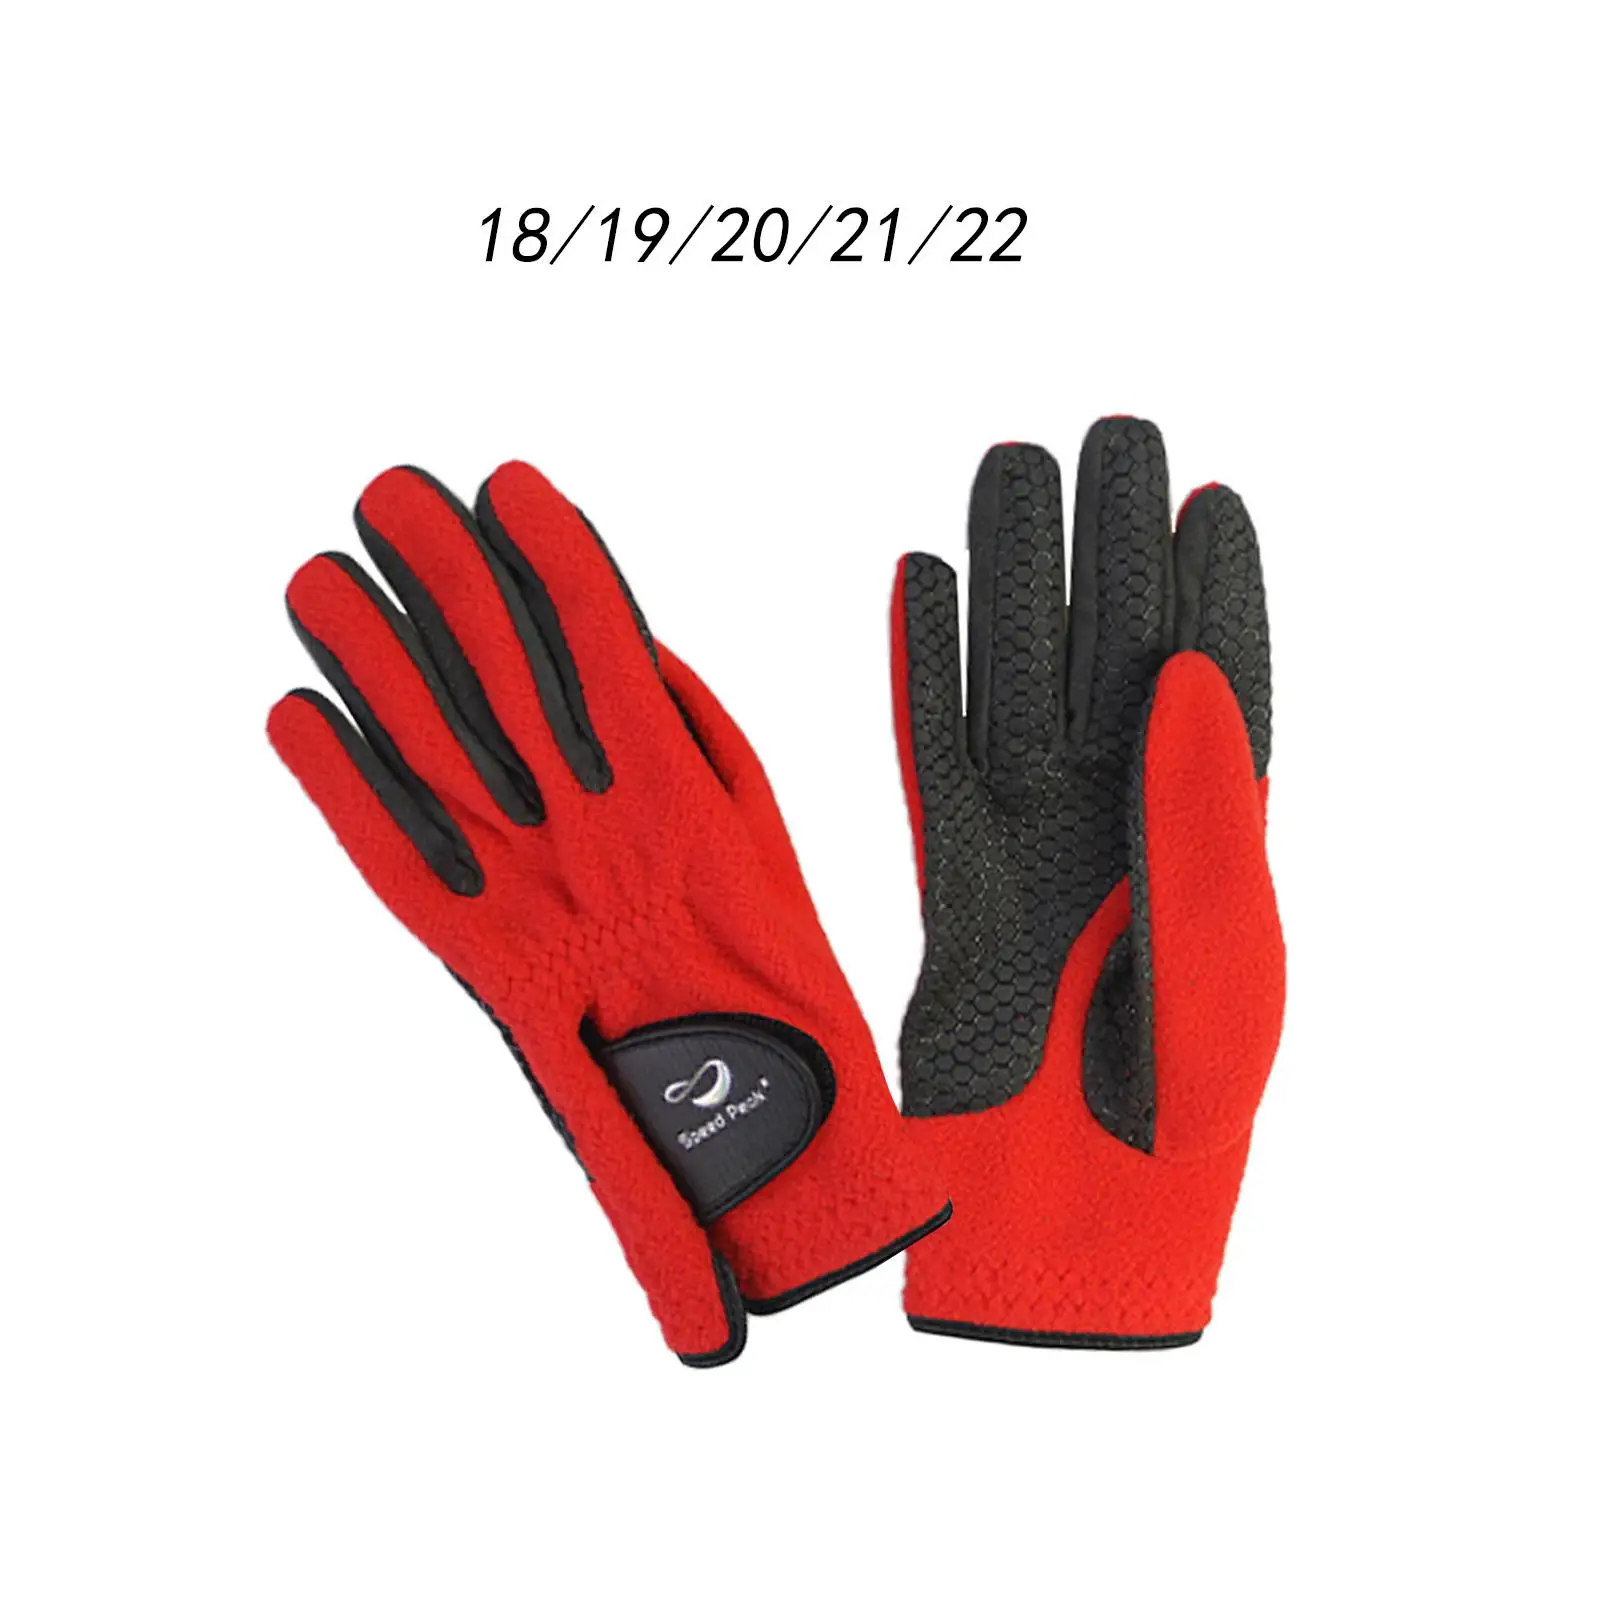 

Golf Gloves Warmth Elastic Comfortable Suede Left Right Pair Golf Gloves Golf Winter Gloves for Golf Season Winter Ladies Girls